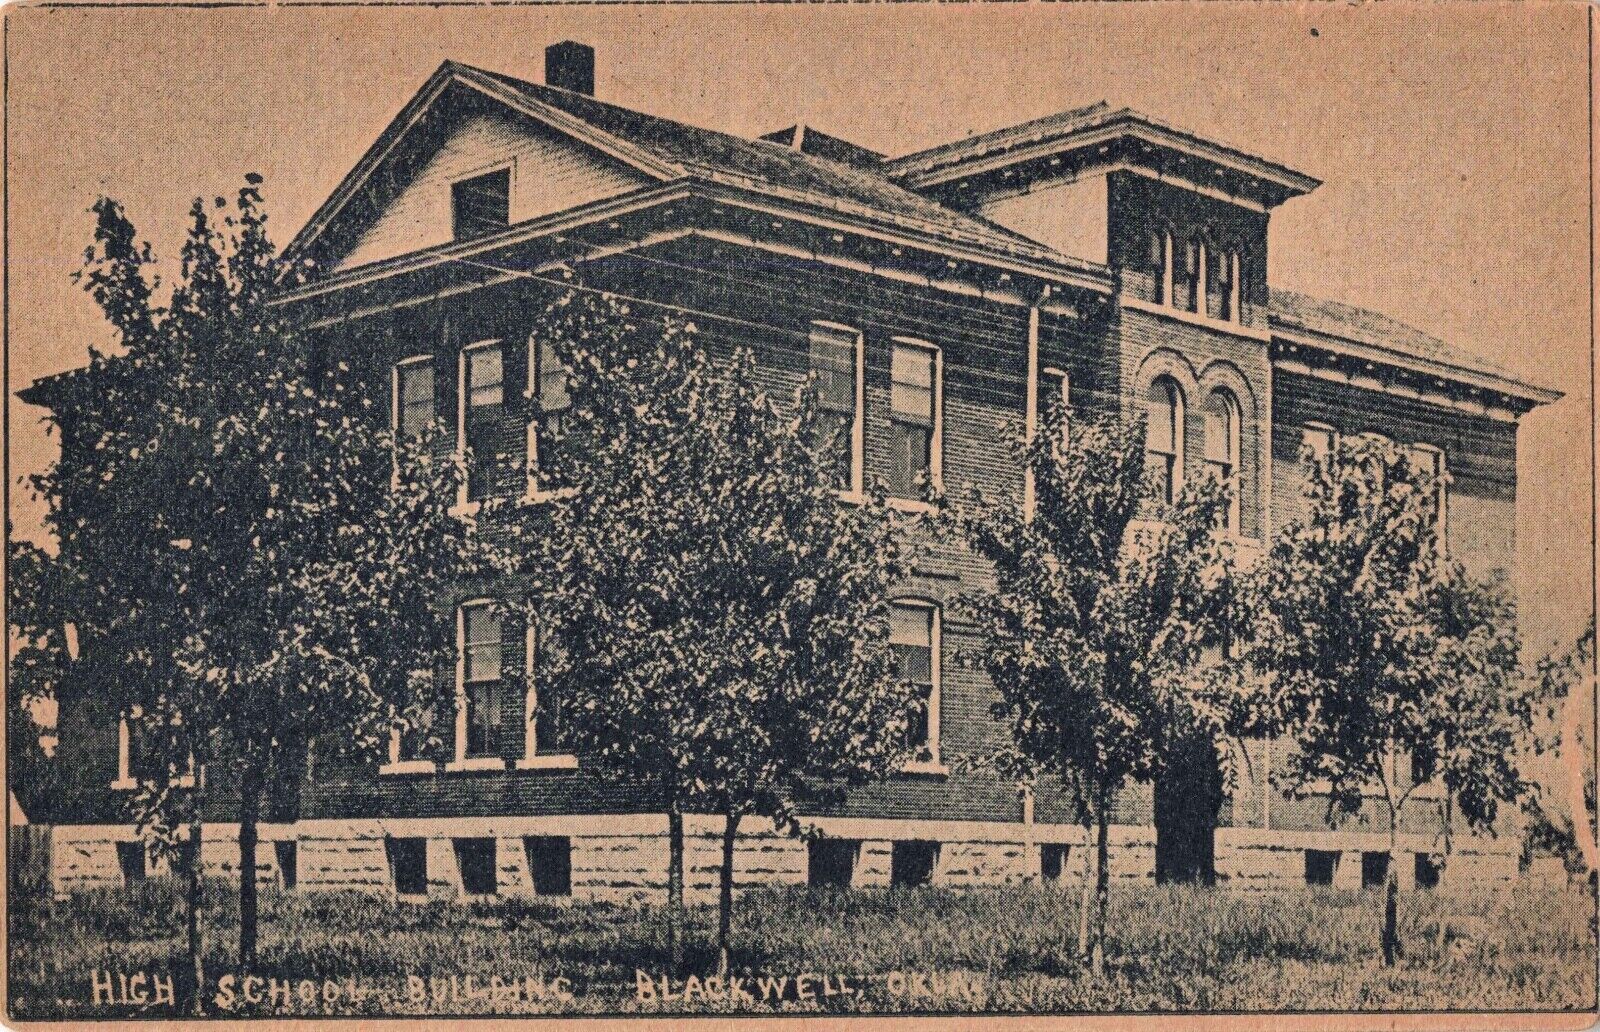 High School Building Blackwell Oklahoma OK c1910 Postcard